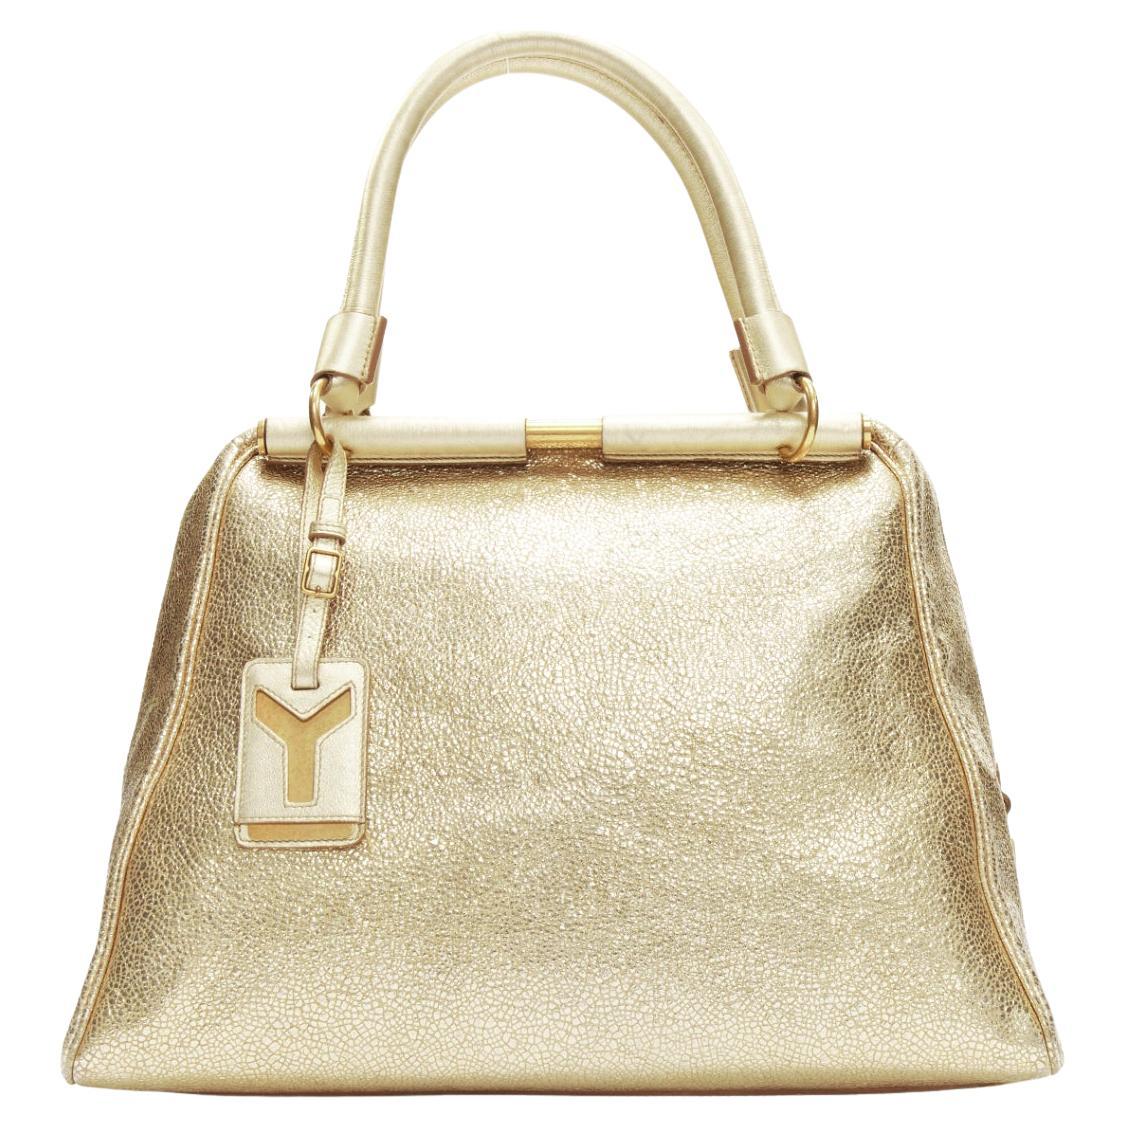 YVES SAINT LAURENT Rive Gauche Majorelle metallic gold medium tote bag